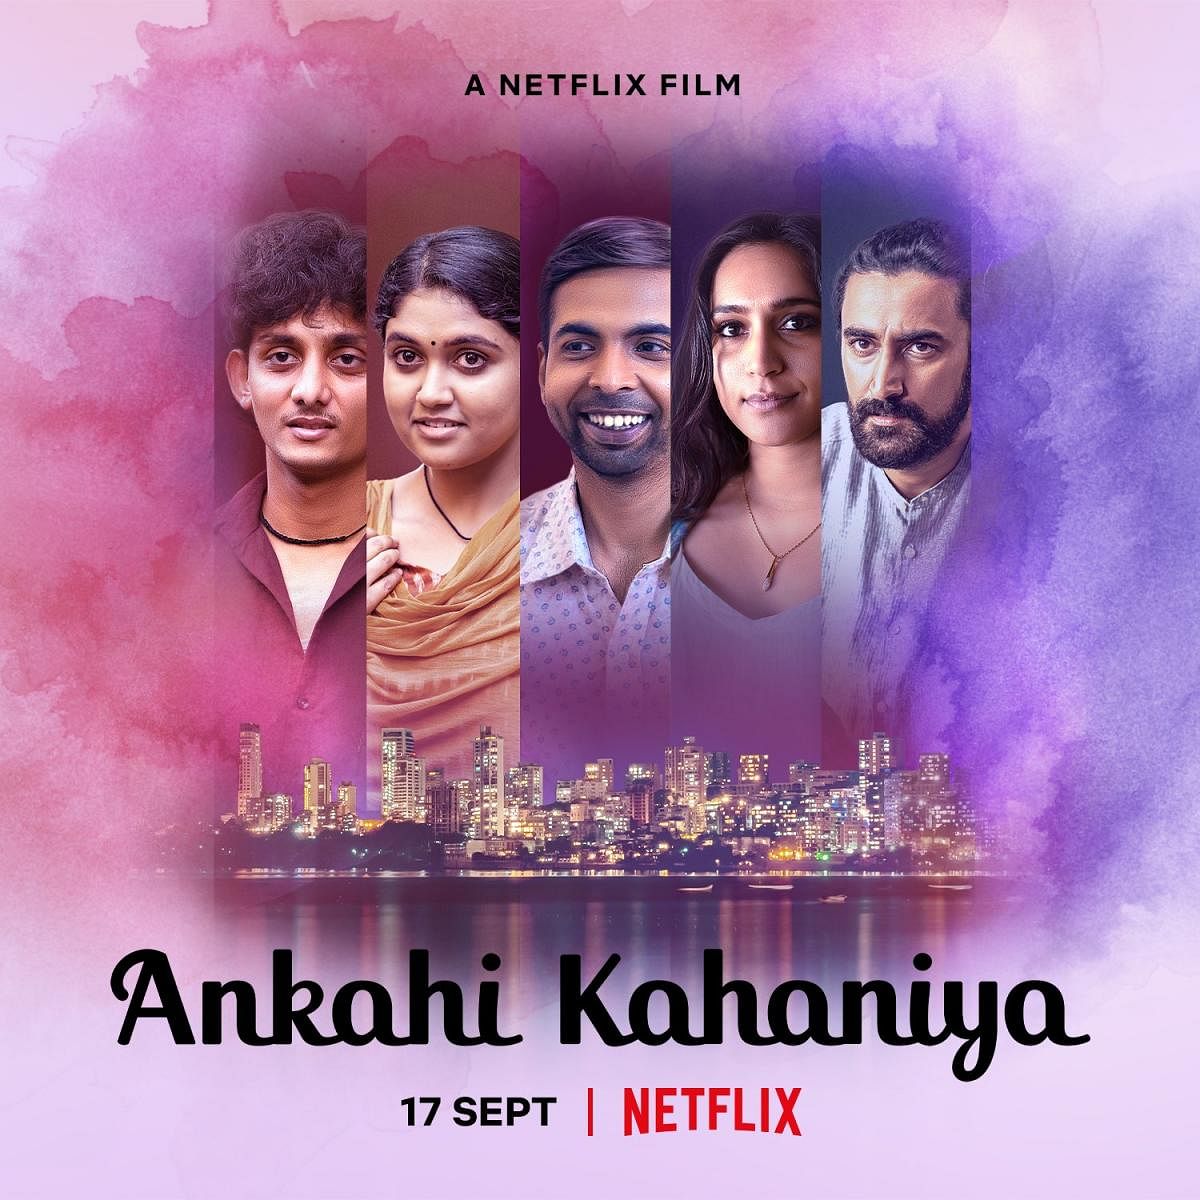 Ankahi Kahaniya review: Engaging films on unique themes